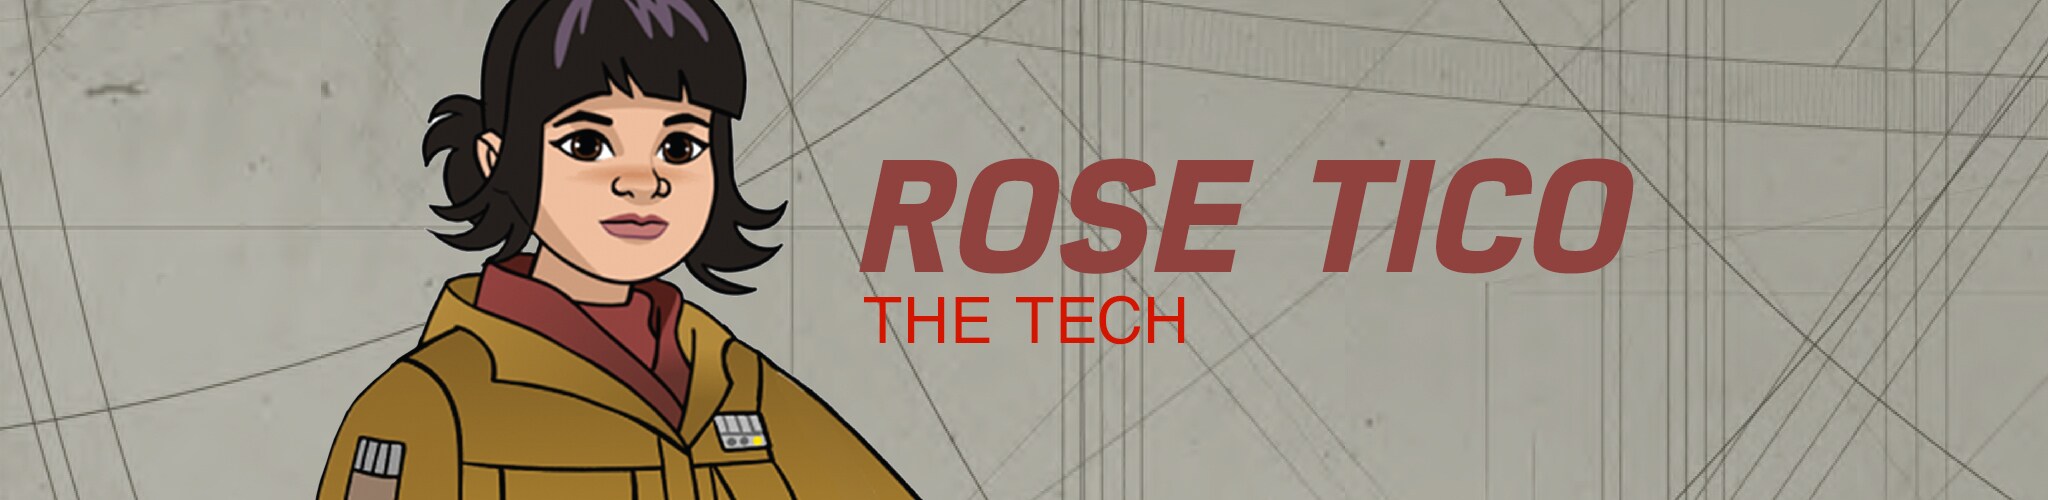 Rose Tico - The Tech